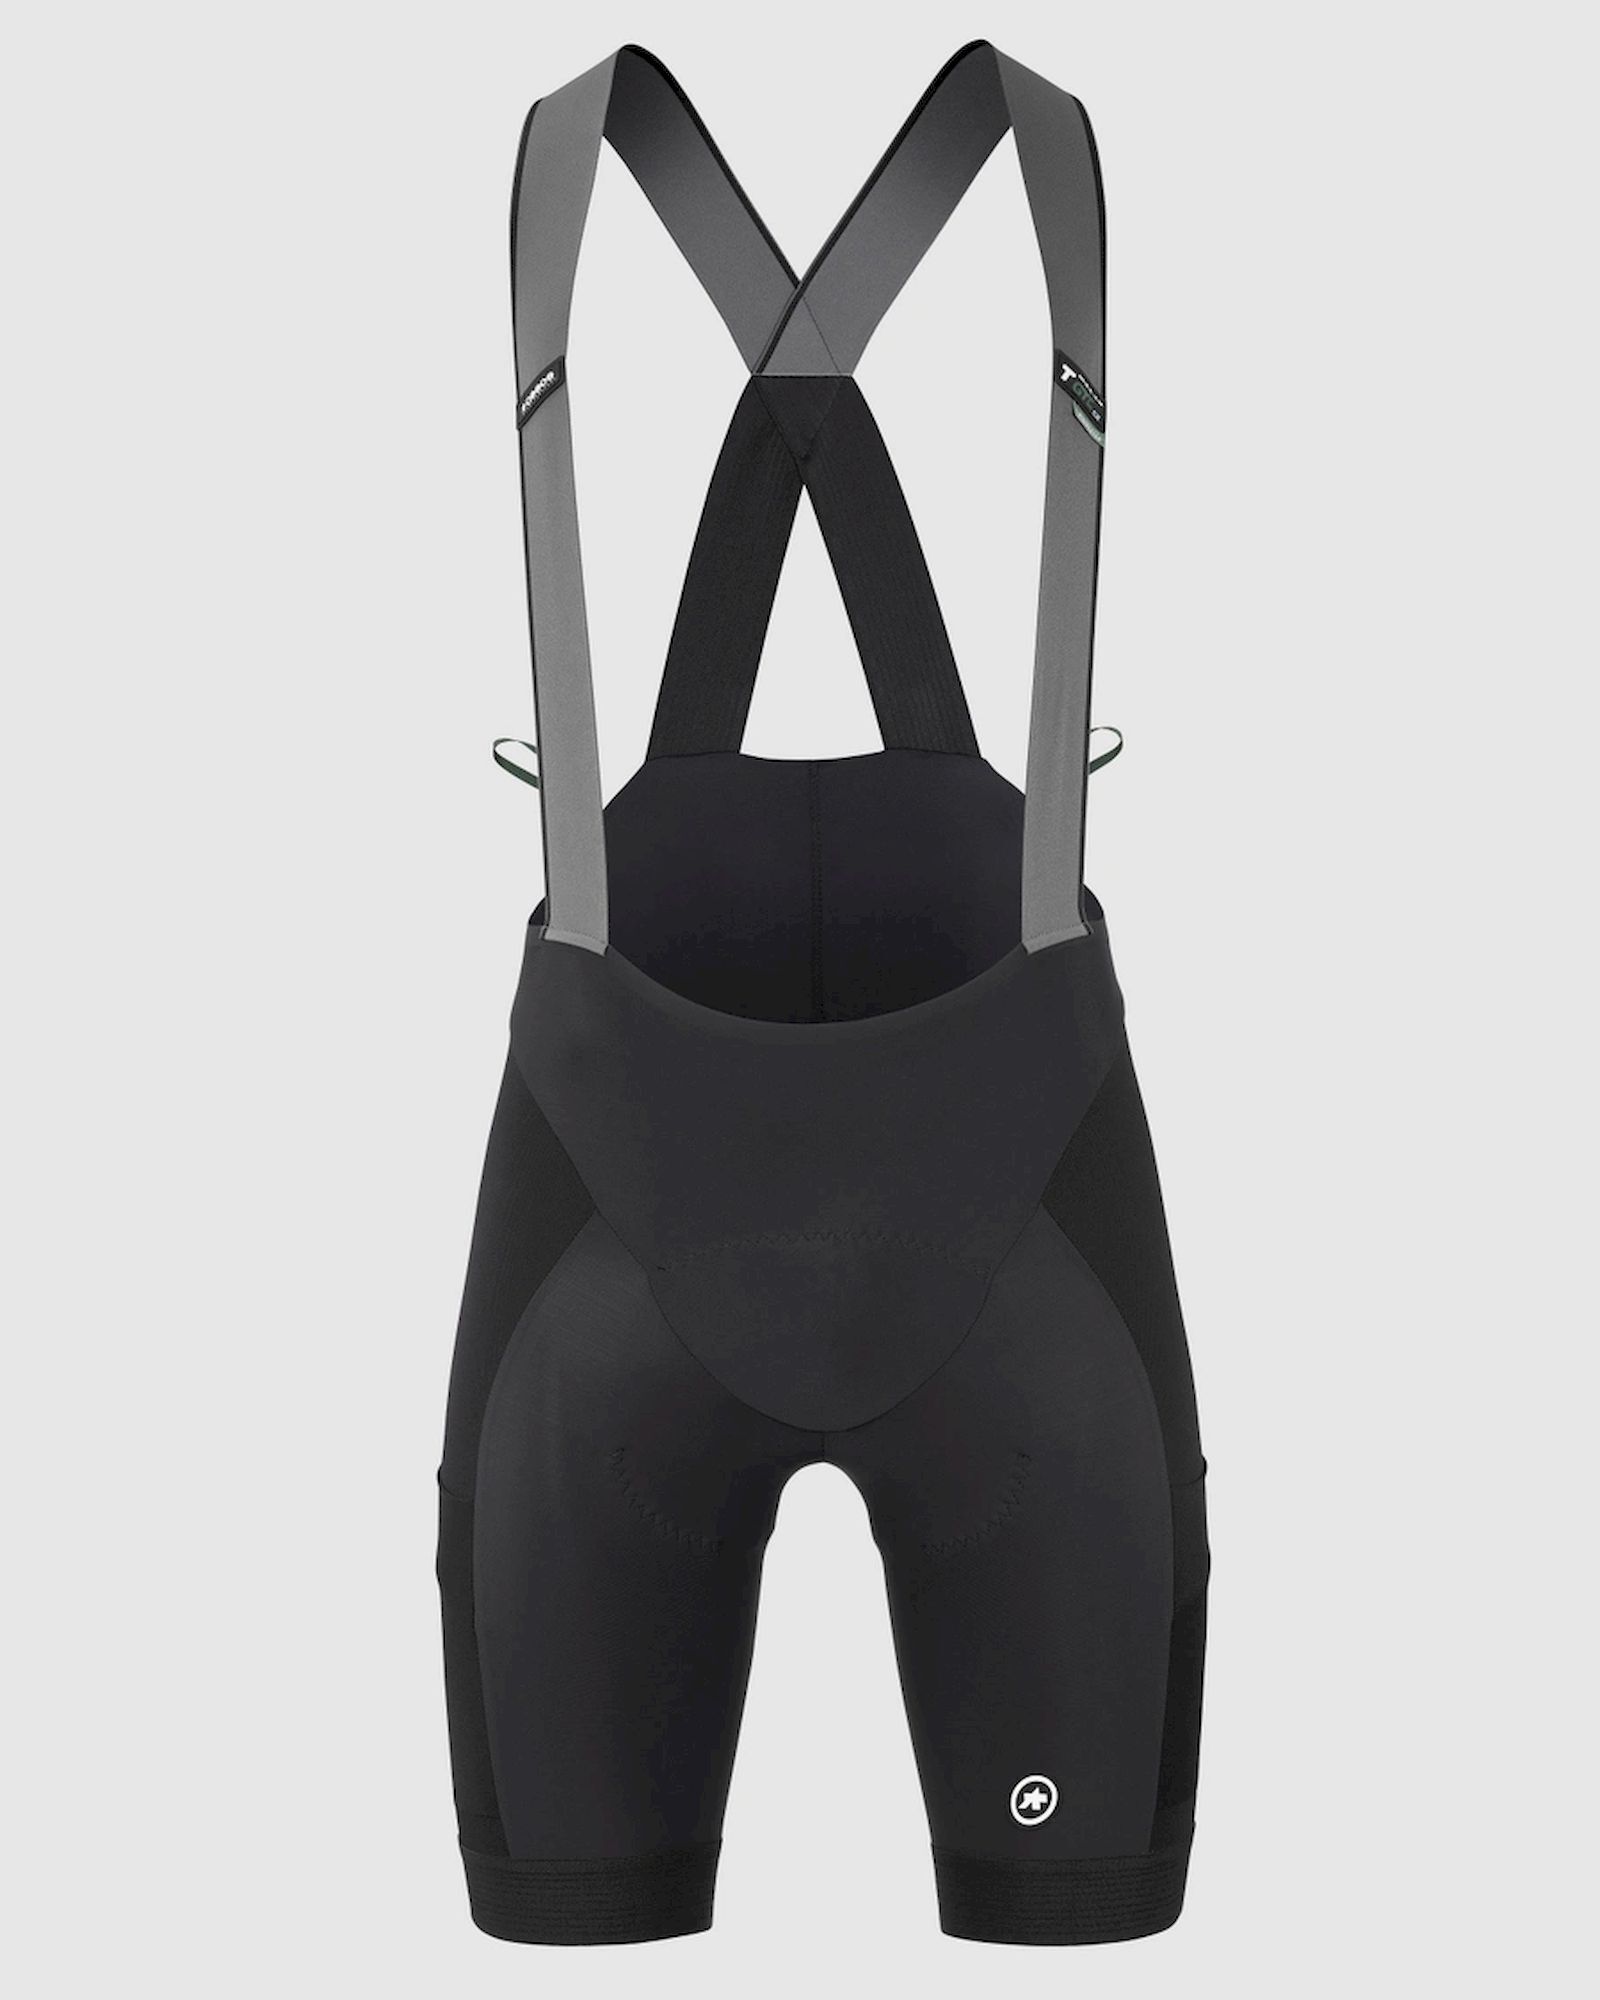 Assos Mille GTC Bib Shorts C2 - Cycling shorts - Men's | Hardloop